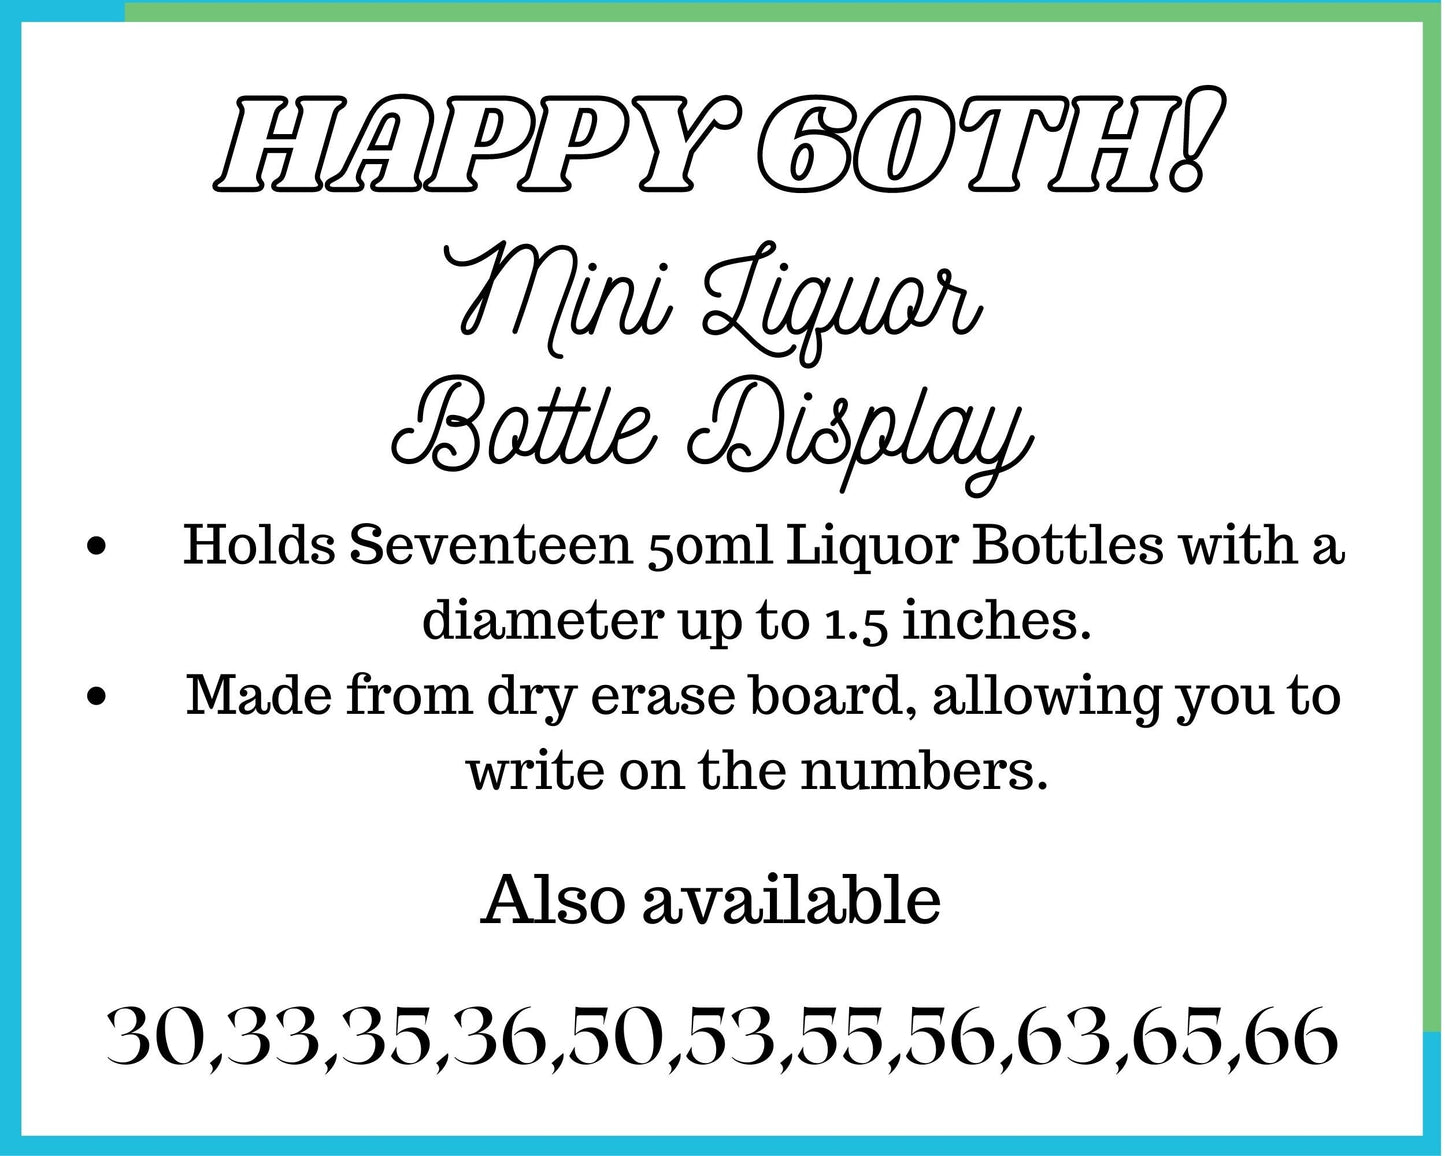 60th Birthday Mini Alcohol Bottle Decoration